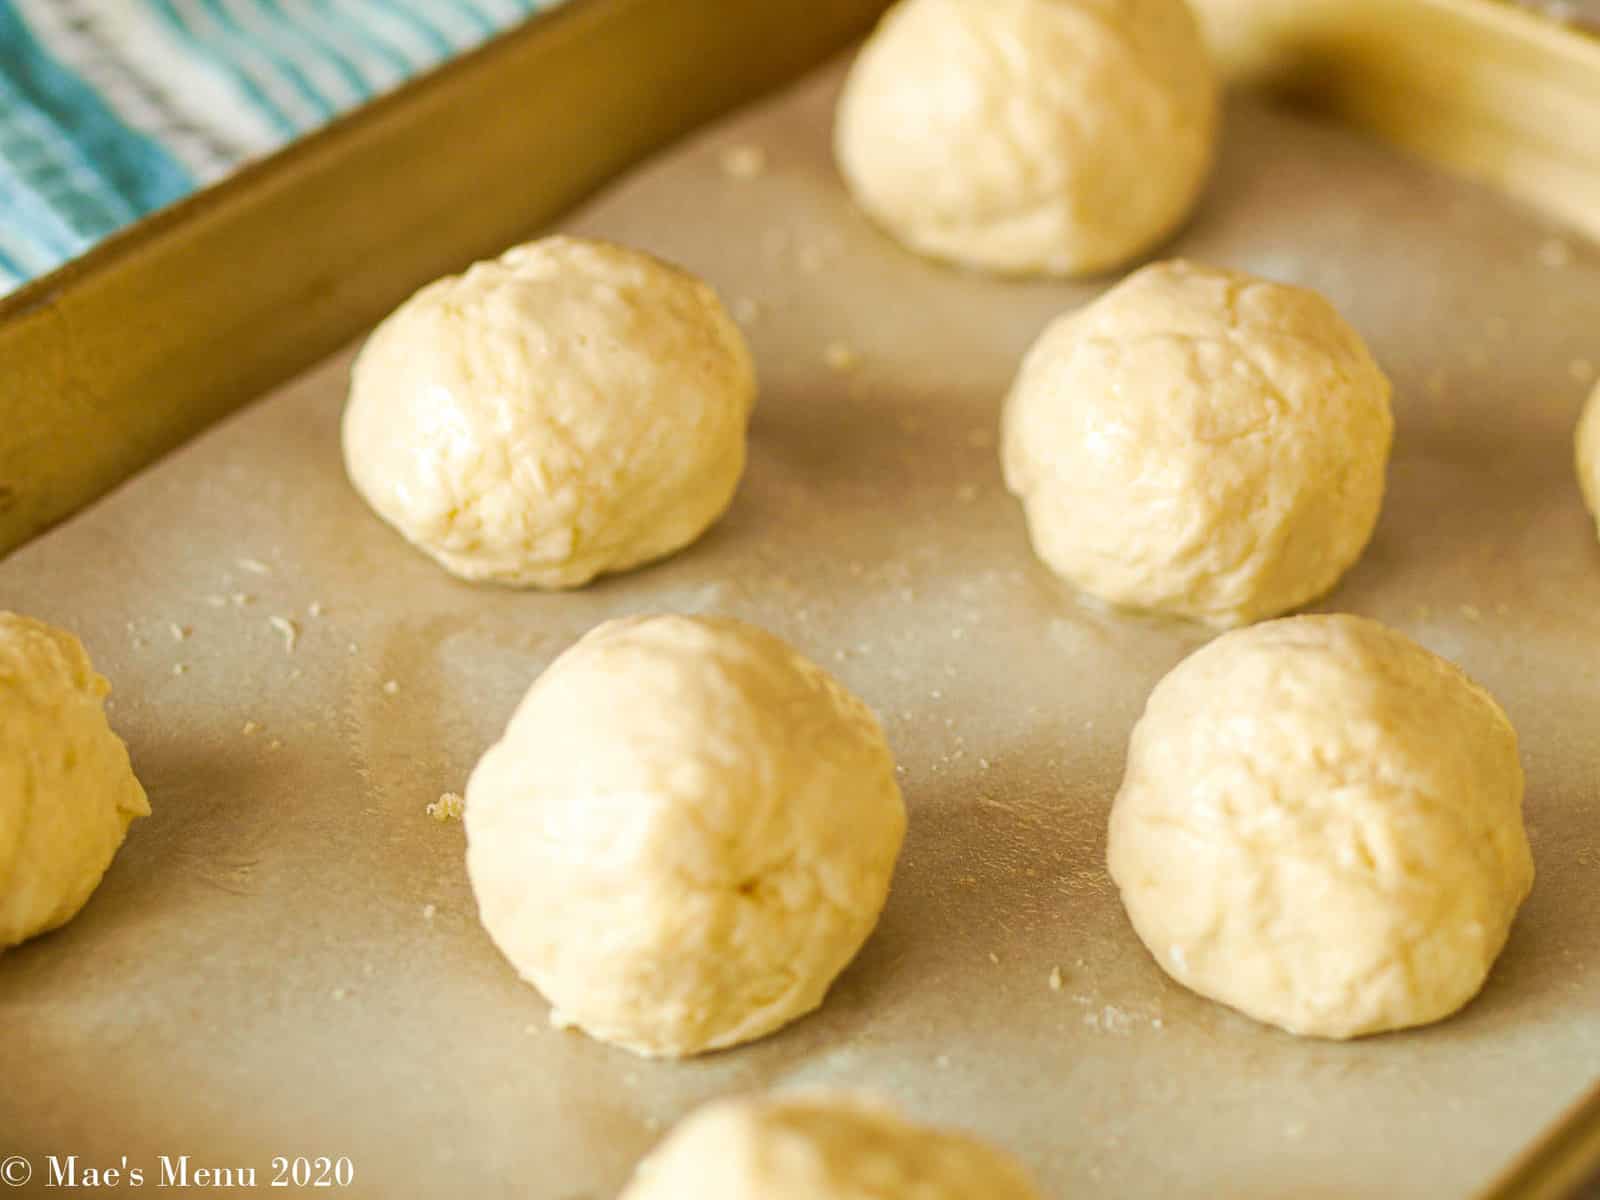 Balls of dinner roll dough ready to bake!